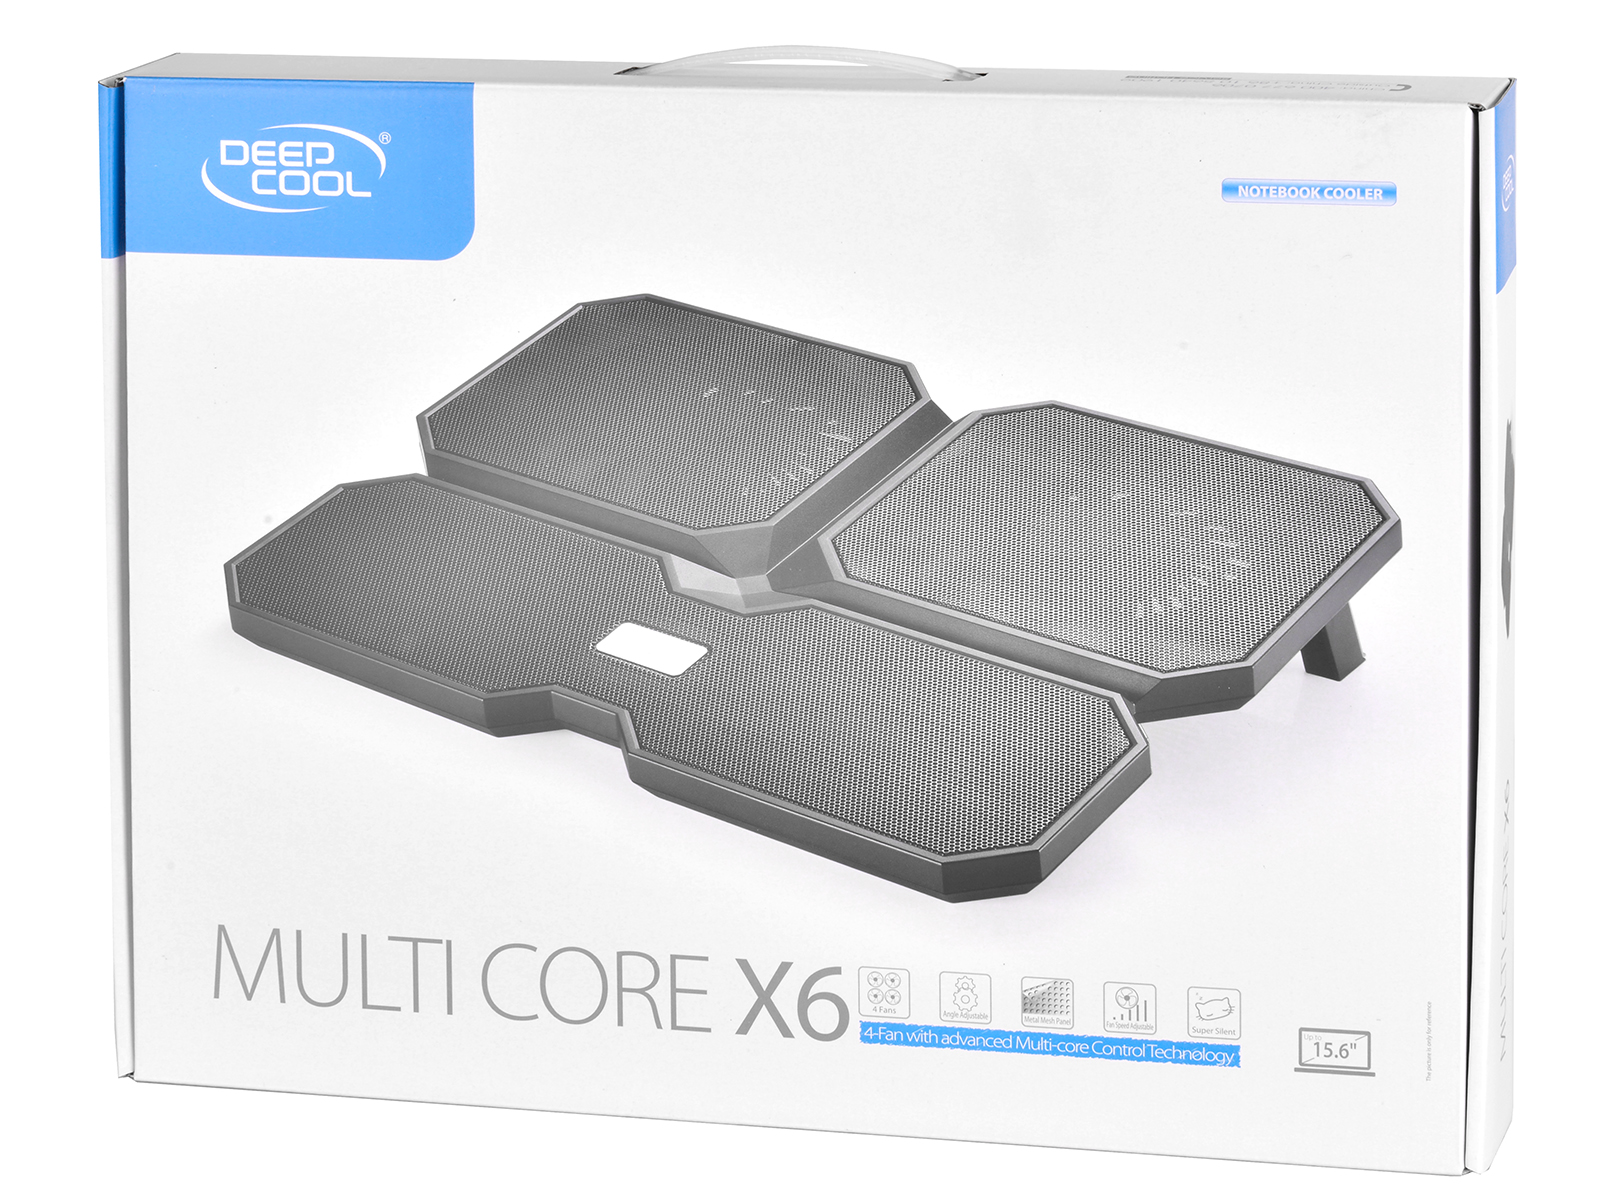 Multi core x6. Подставка Deepcool Multi Core x6. Подставка под ноутбук Deepcool Multi Core x6. Cooler for Notebook Deepcool x6 Multi Core 15,6". Подставка для ноутбука Deepcool Multicore x6 черный.